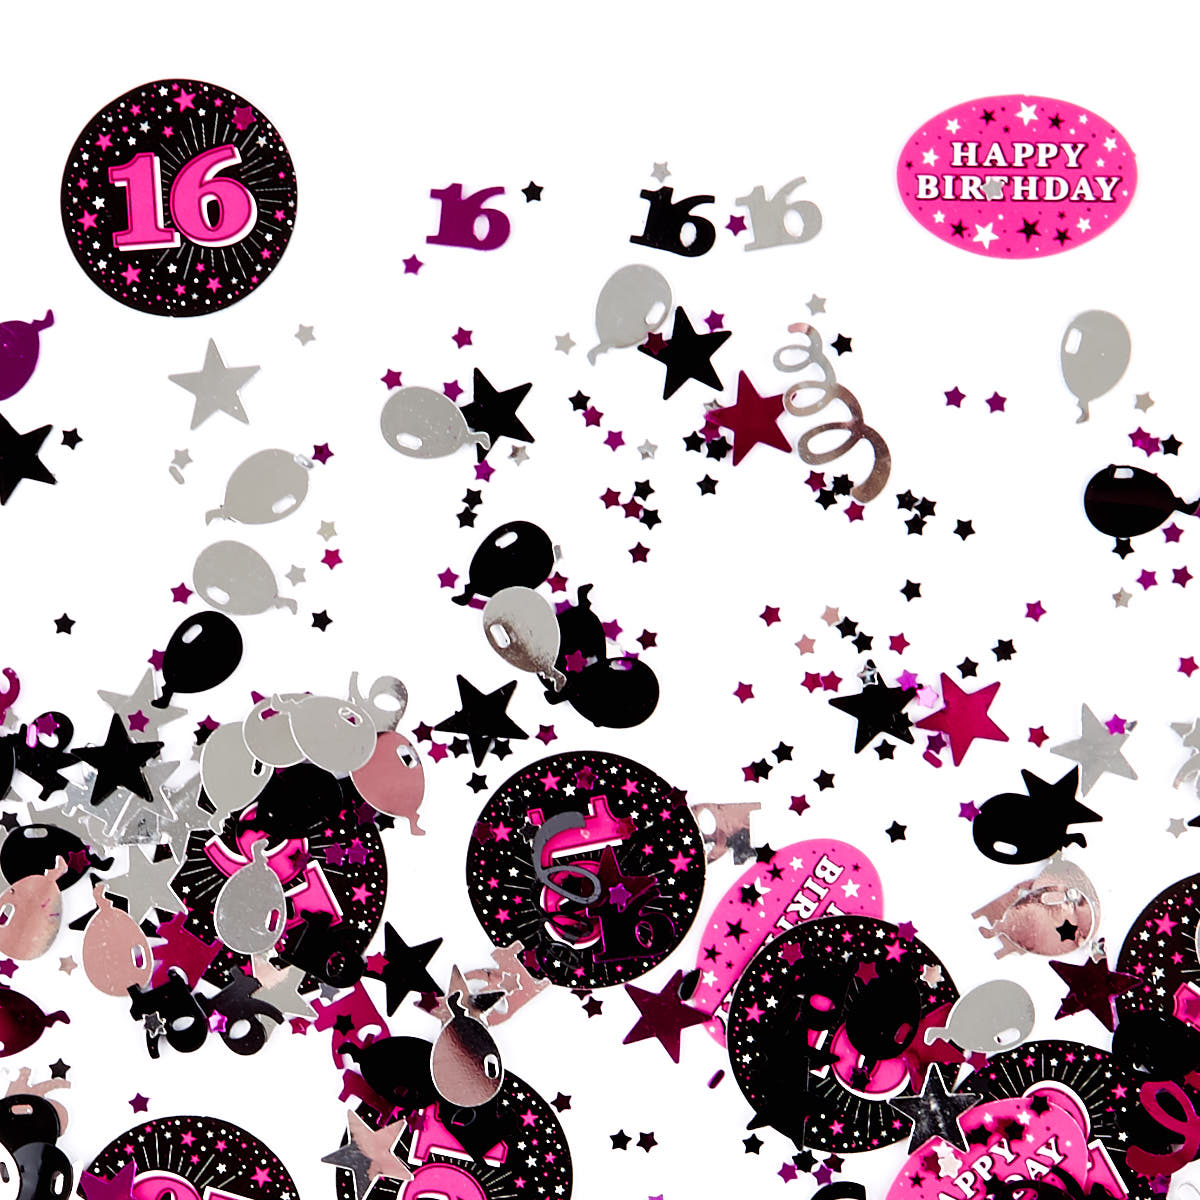 16th Birthday Pink Foiletti